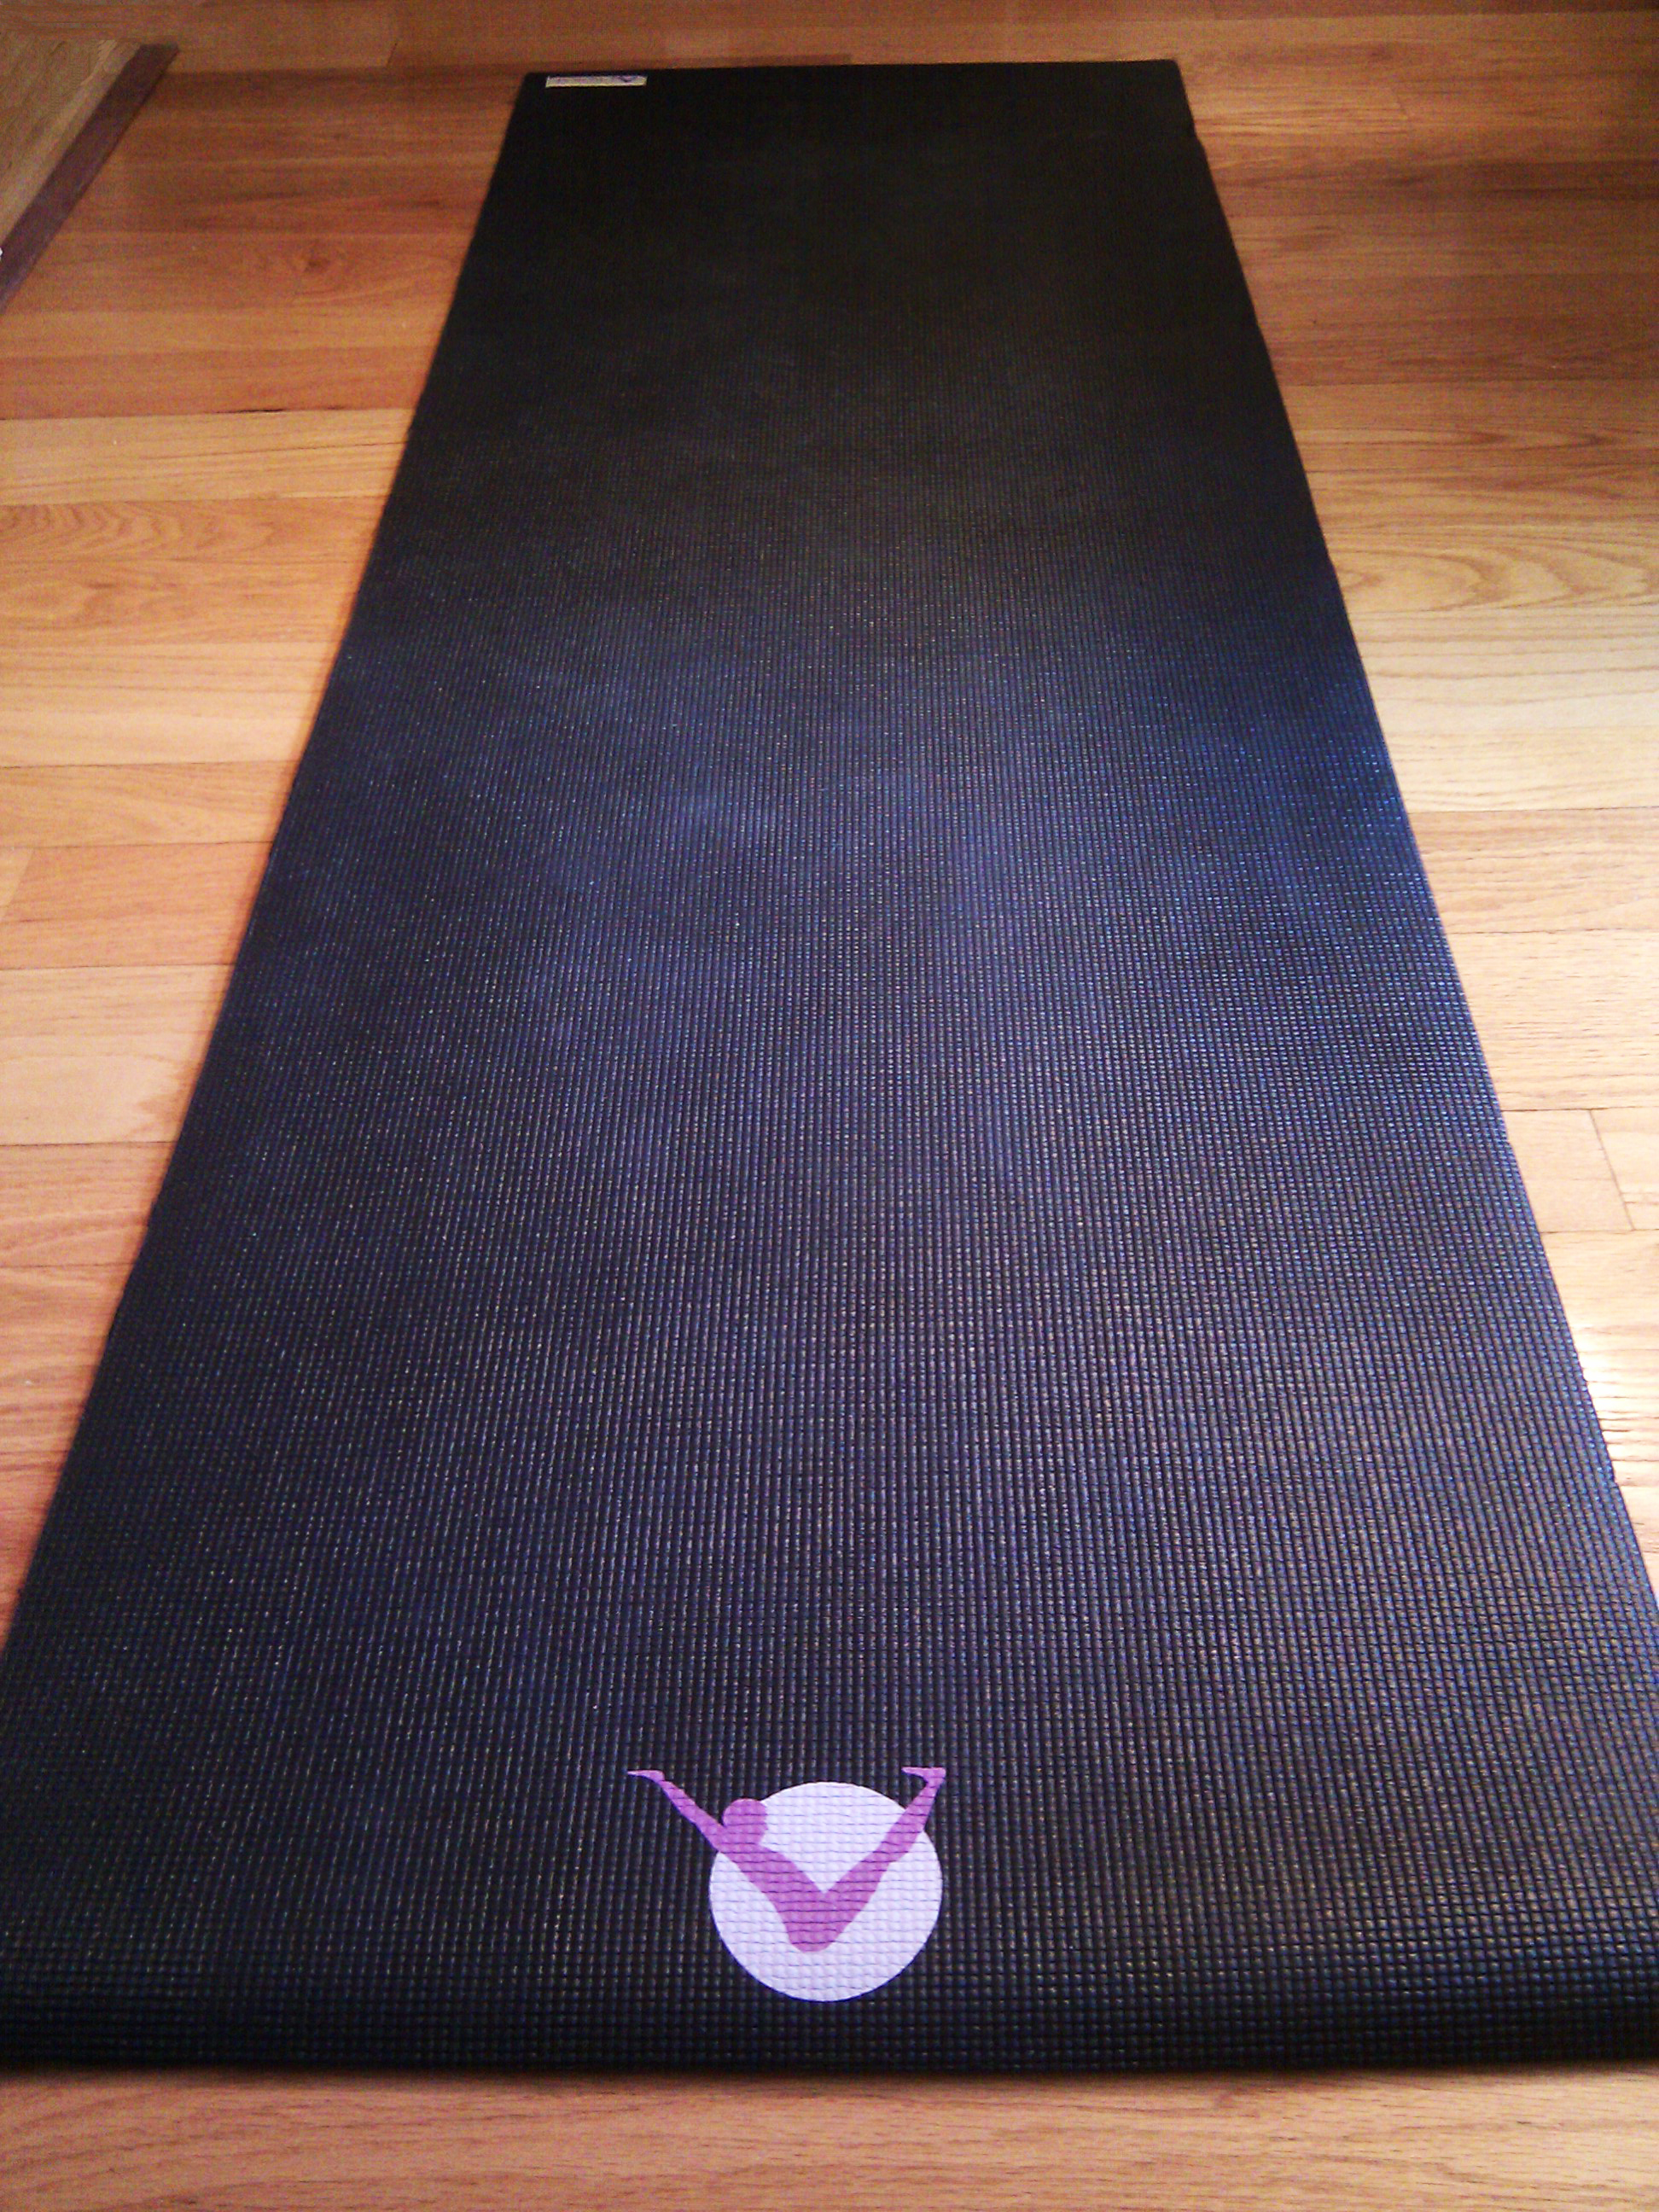 Aurorae Classic Yoga Mat review 